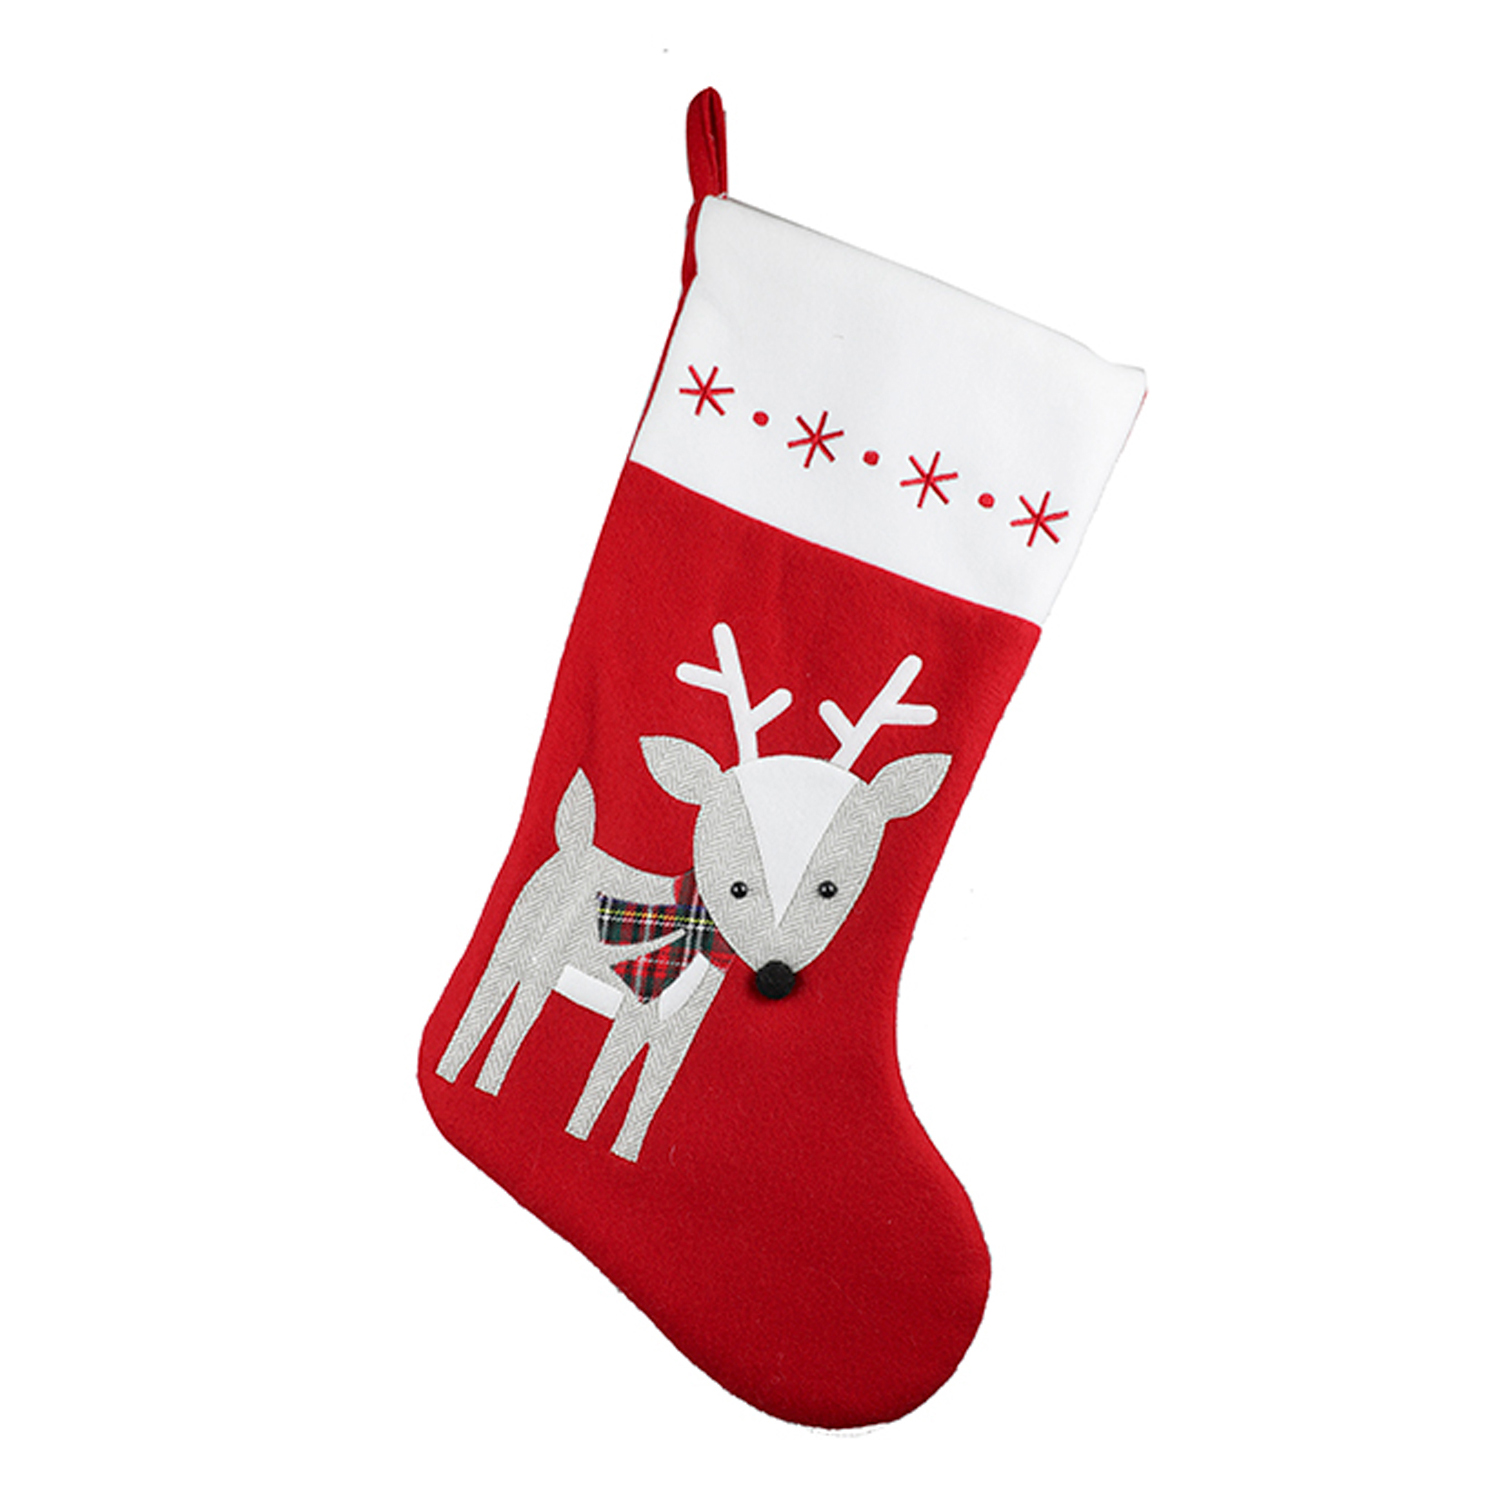 Danson - Christmas stockings, 55 cm, red